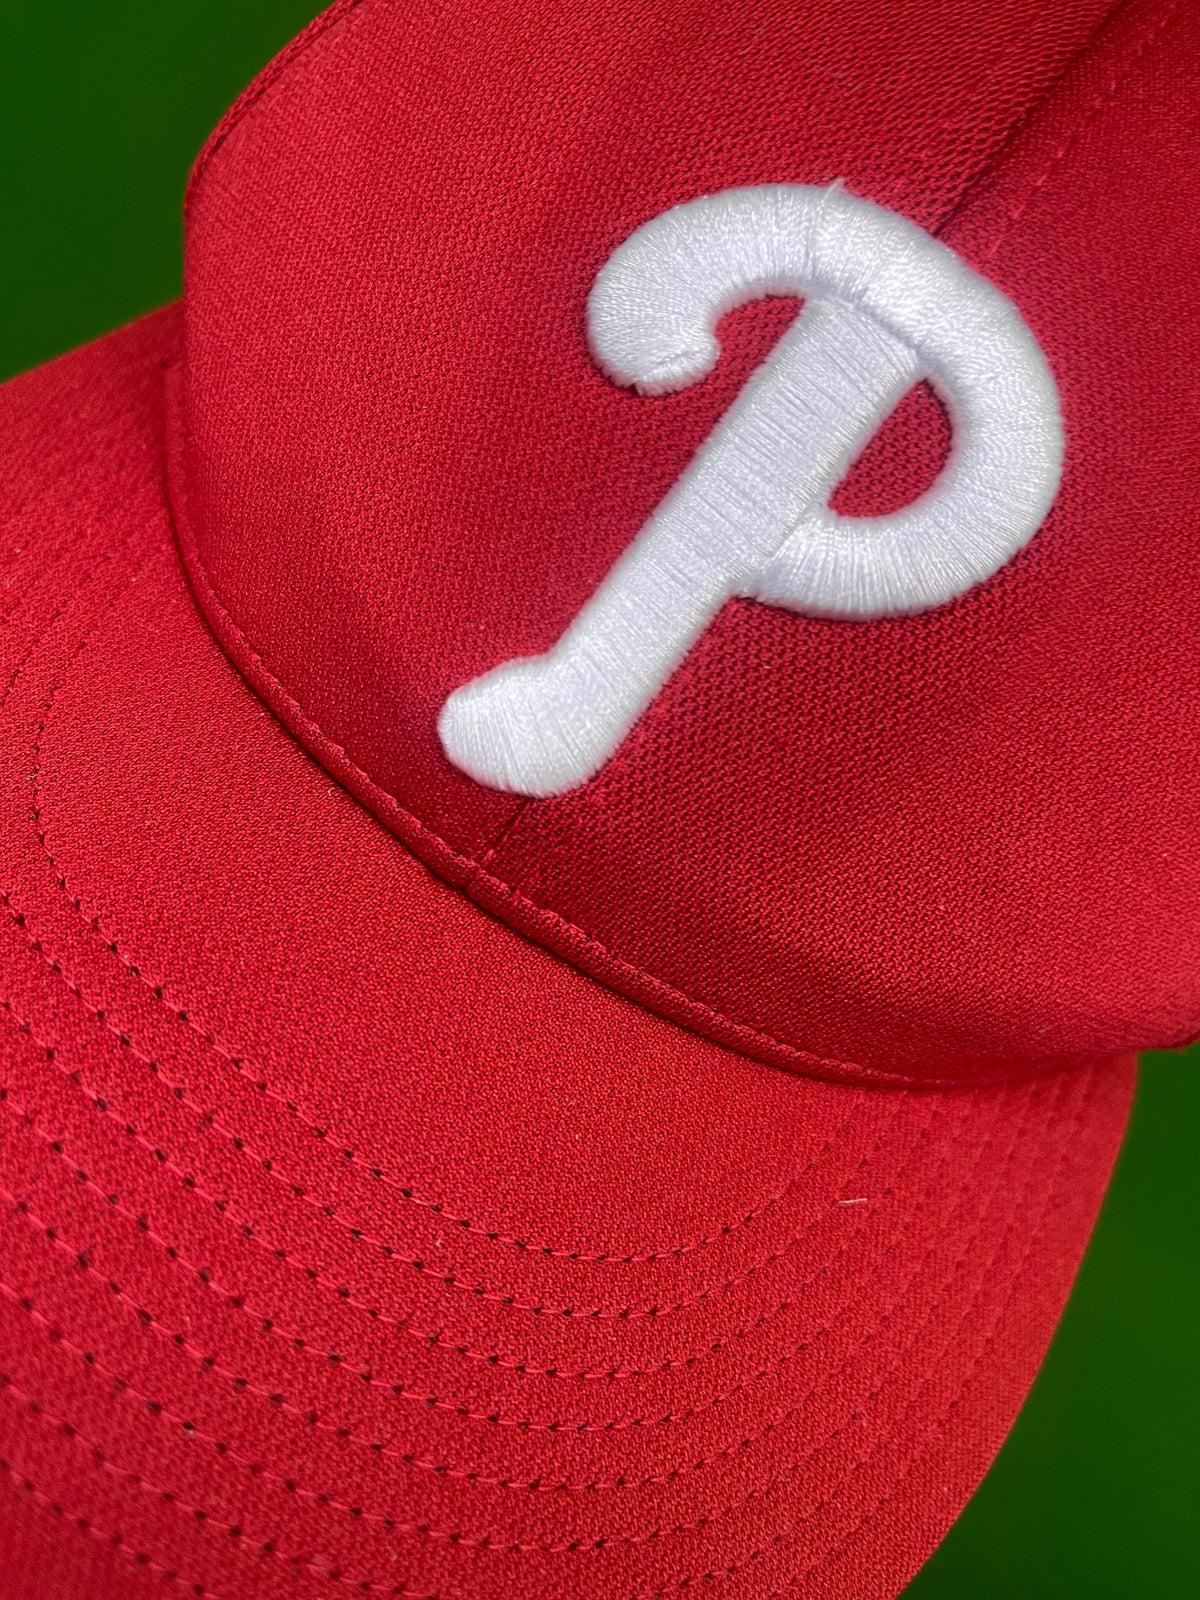 MLB Philadelphia Phillies OC Sports Red Baseball Cap/Hat Large/X-Large